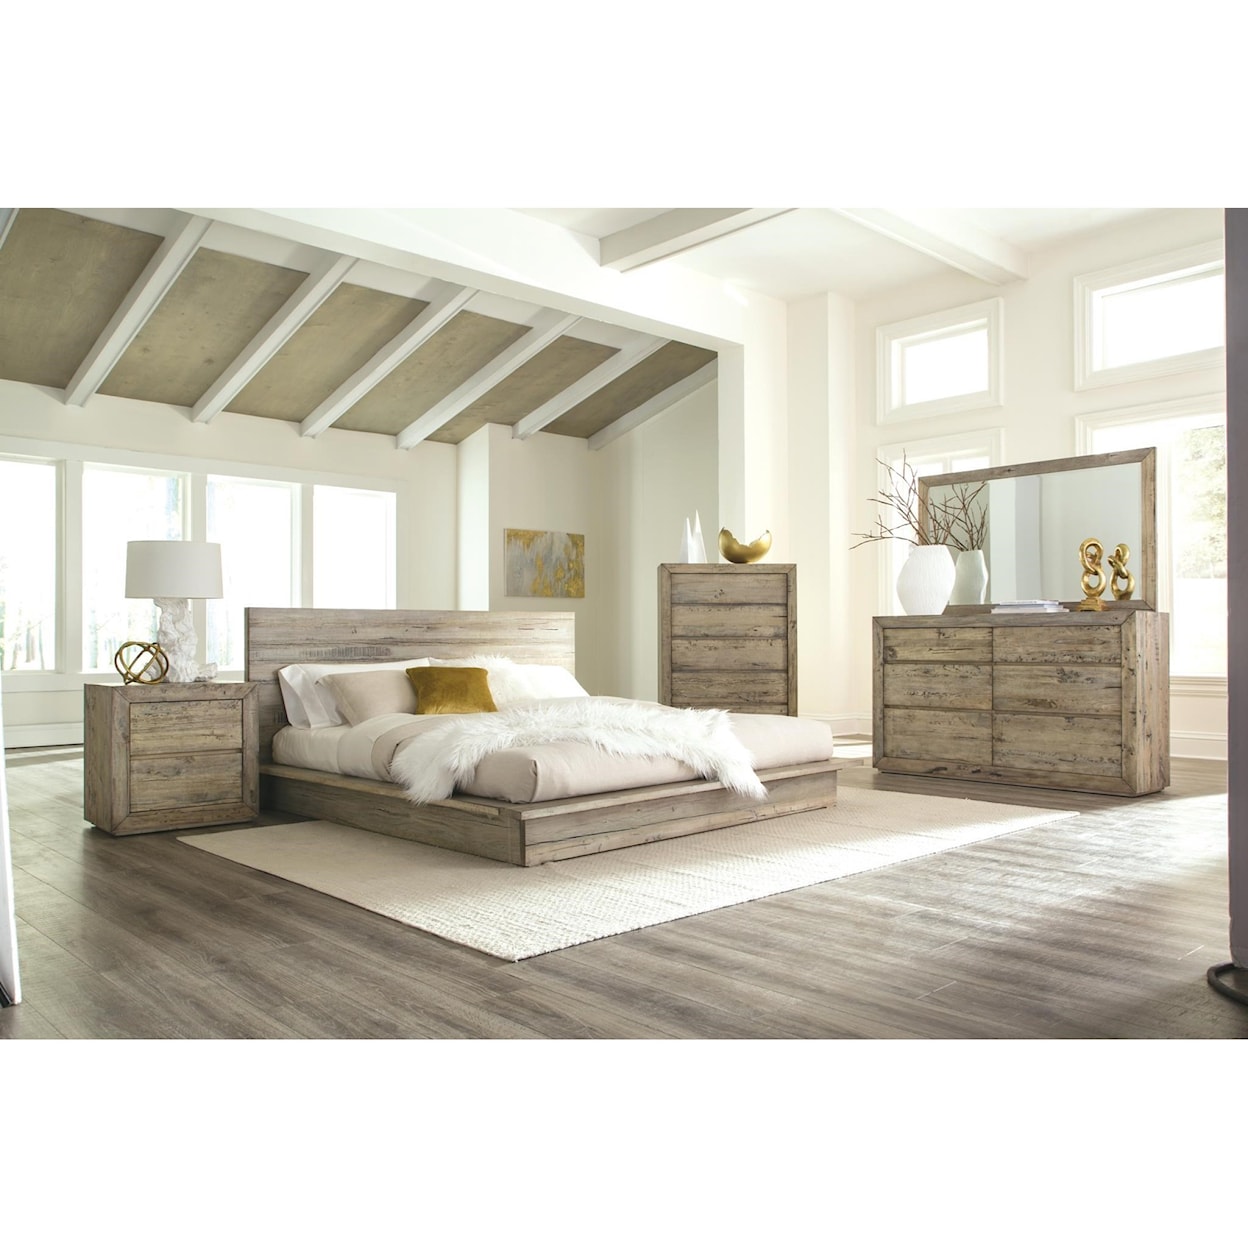 Napa Furniture Designs Renewal Queen Bedroom Group